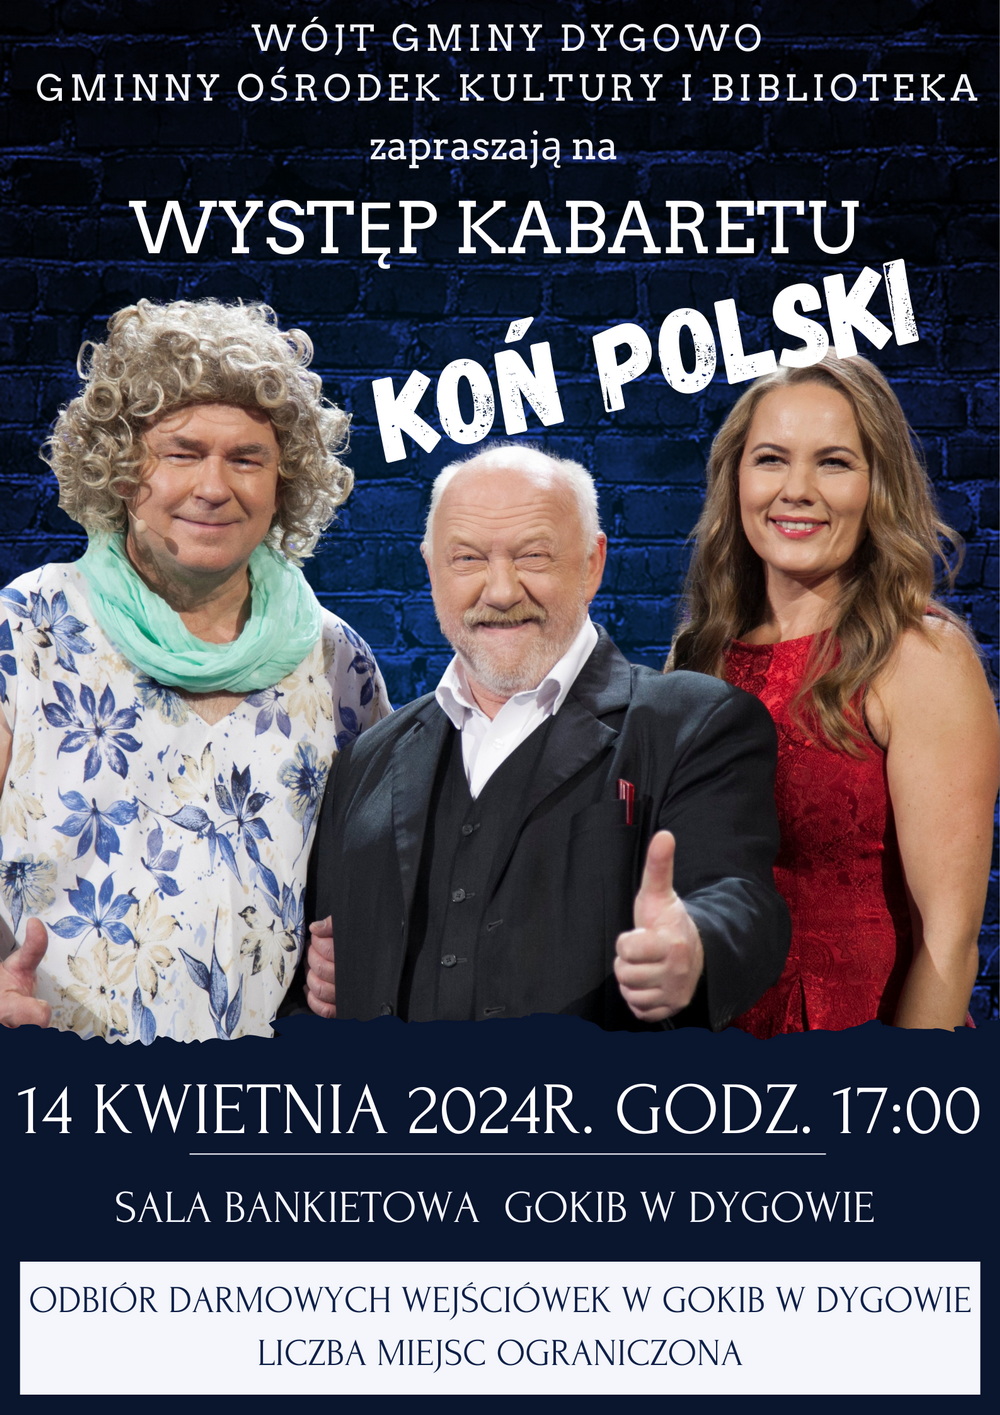 Występ kabaretu "Koń Polski"